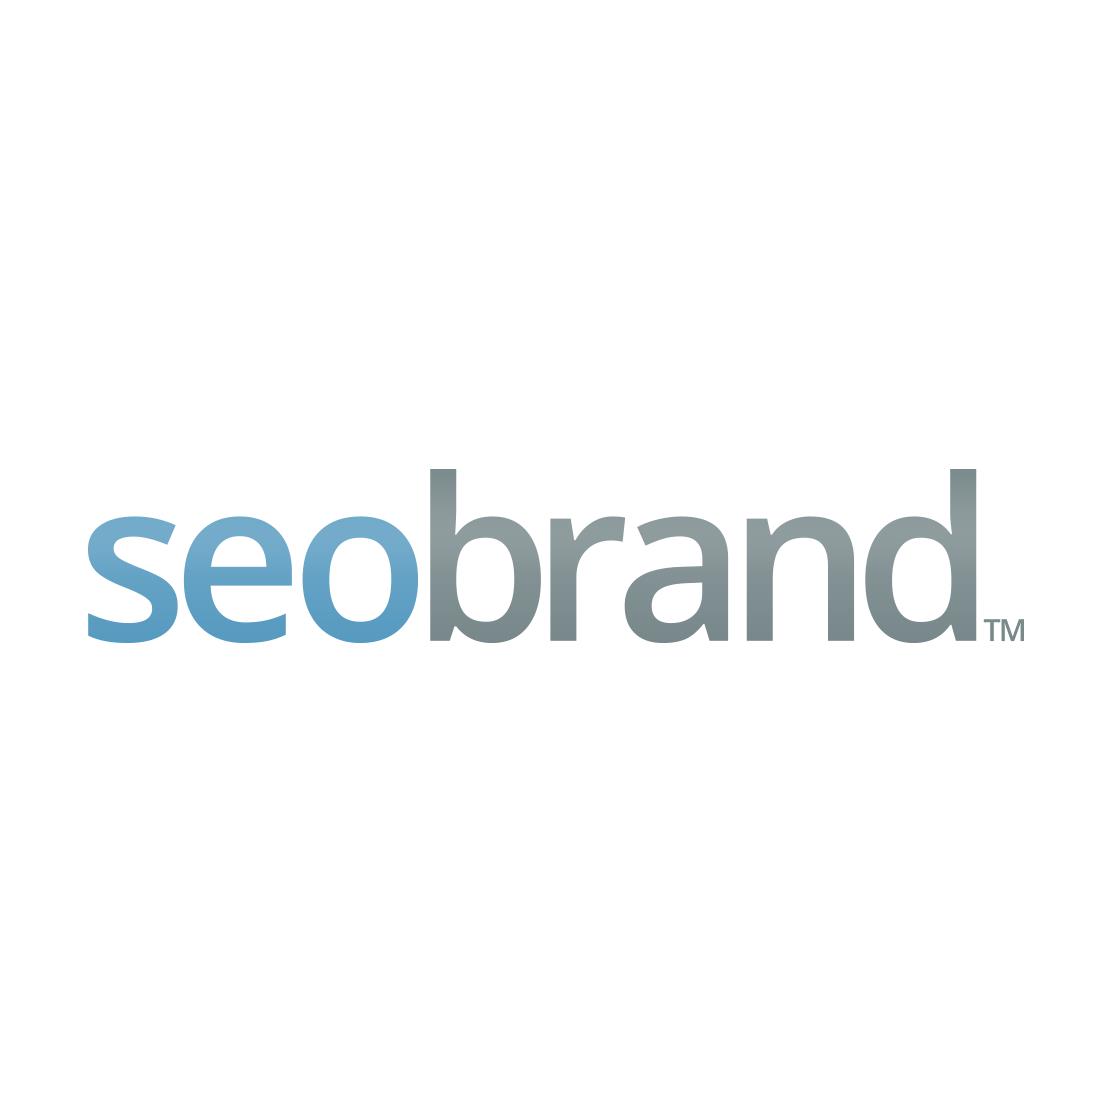 Best Real Estate SEO Agency Logo: SEO Brand